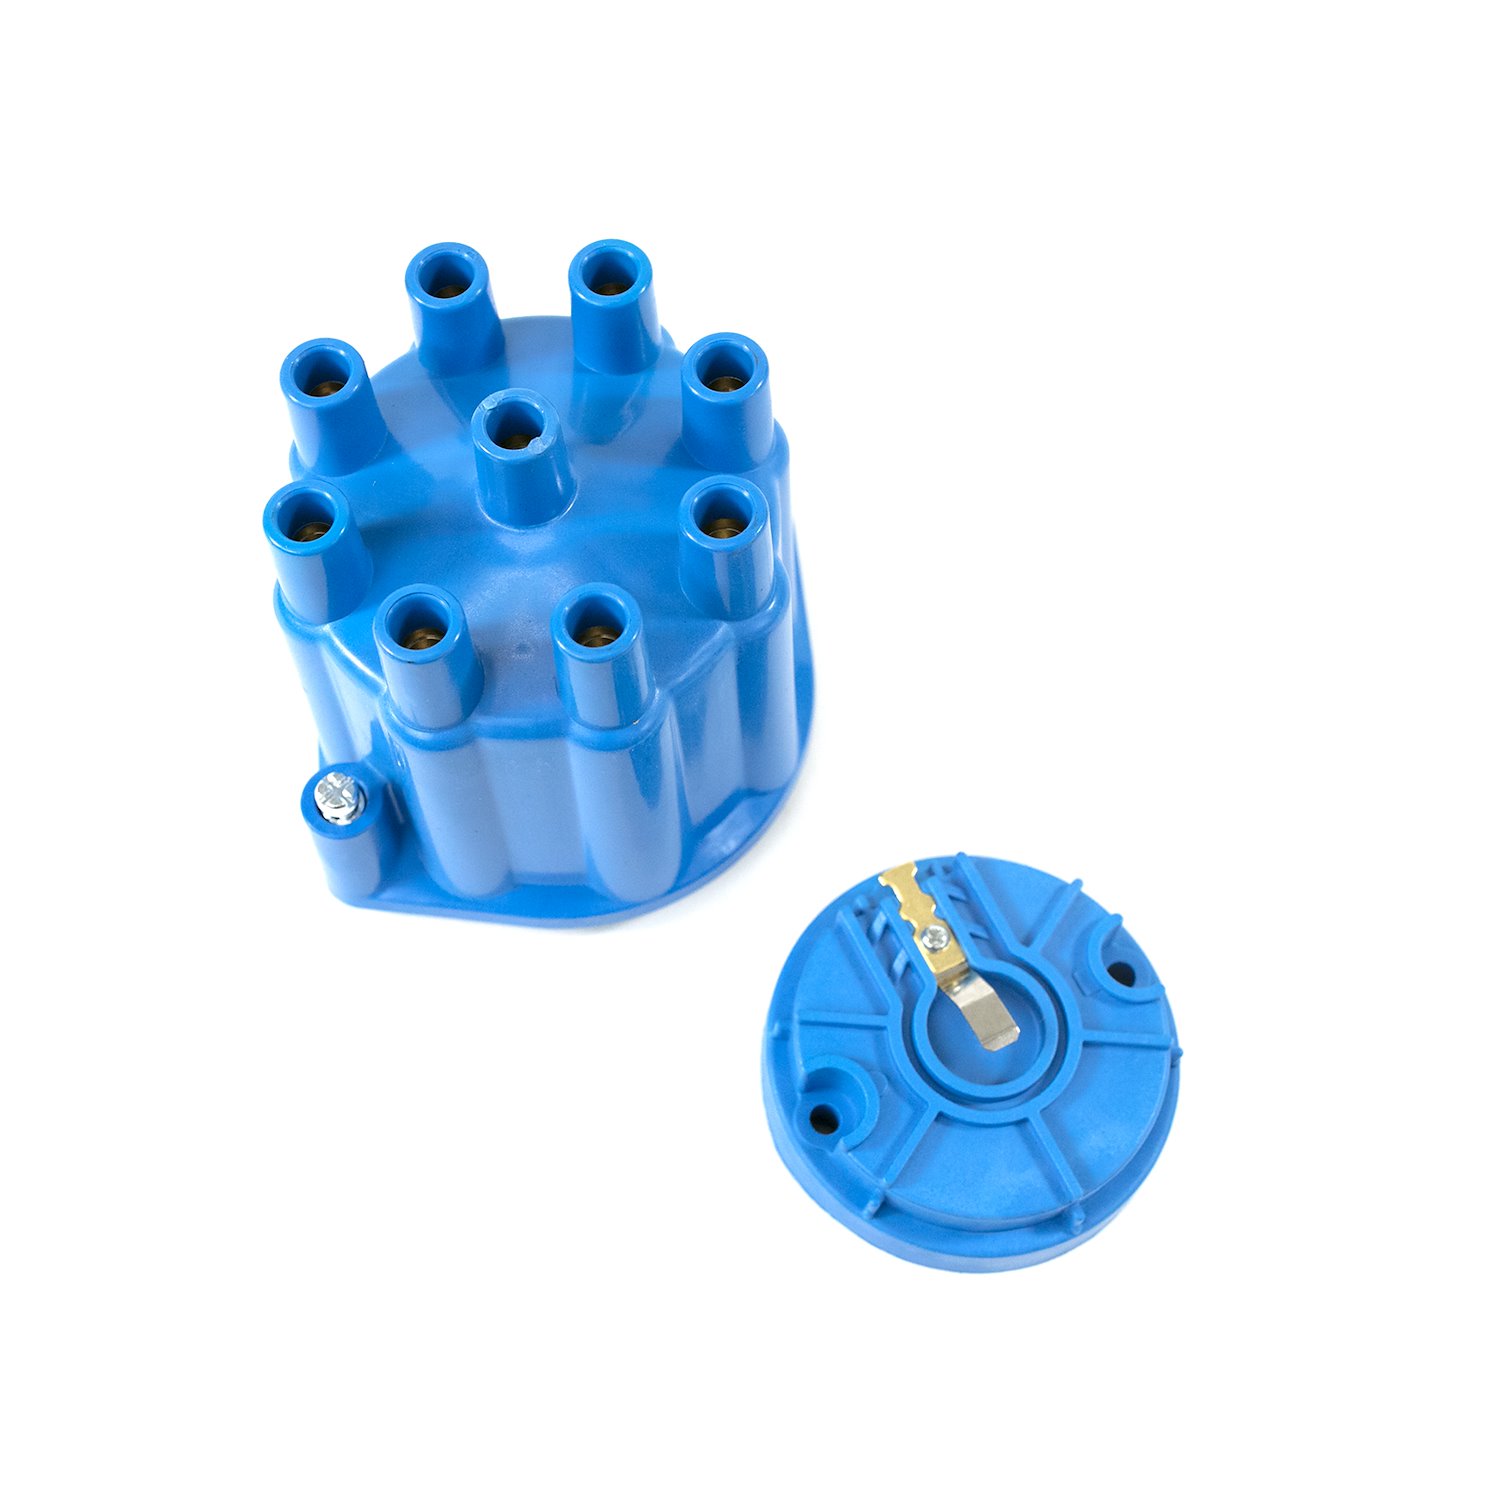 JM6974BL Pro Series Distributor Cap and Rotor Kit, 8 Cylinder Female, Blue